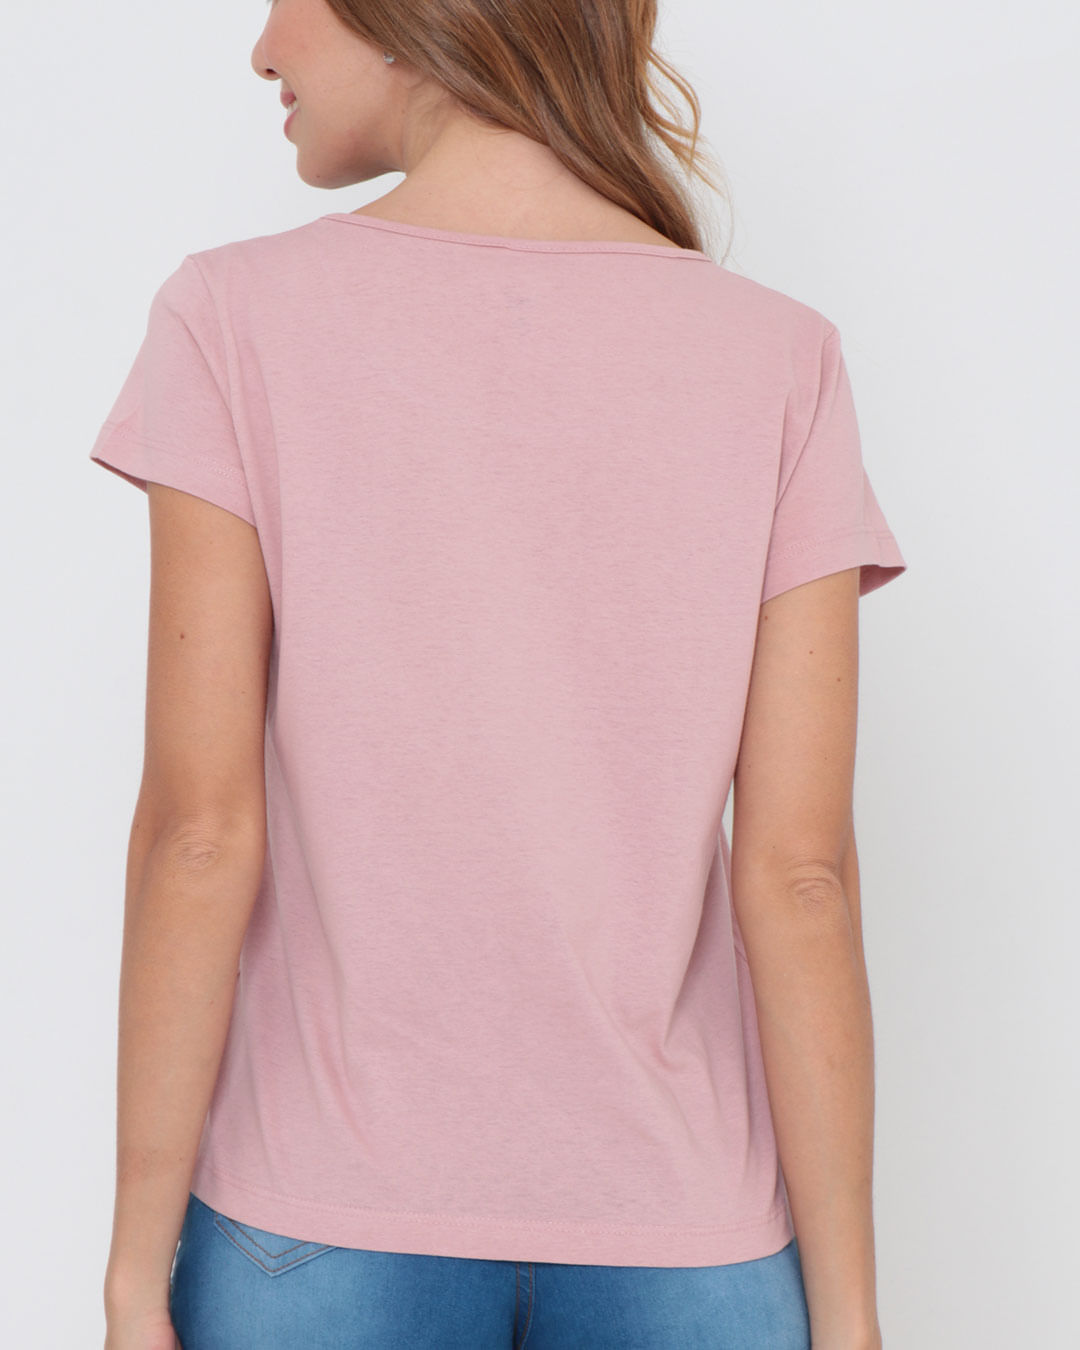 Camiseta-3333-Silk-Wednesday-Rose-M6---Rosa-Claro